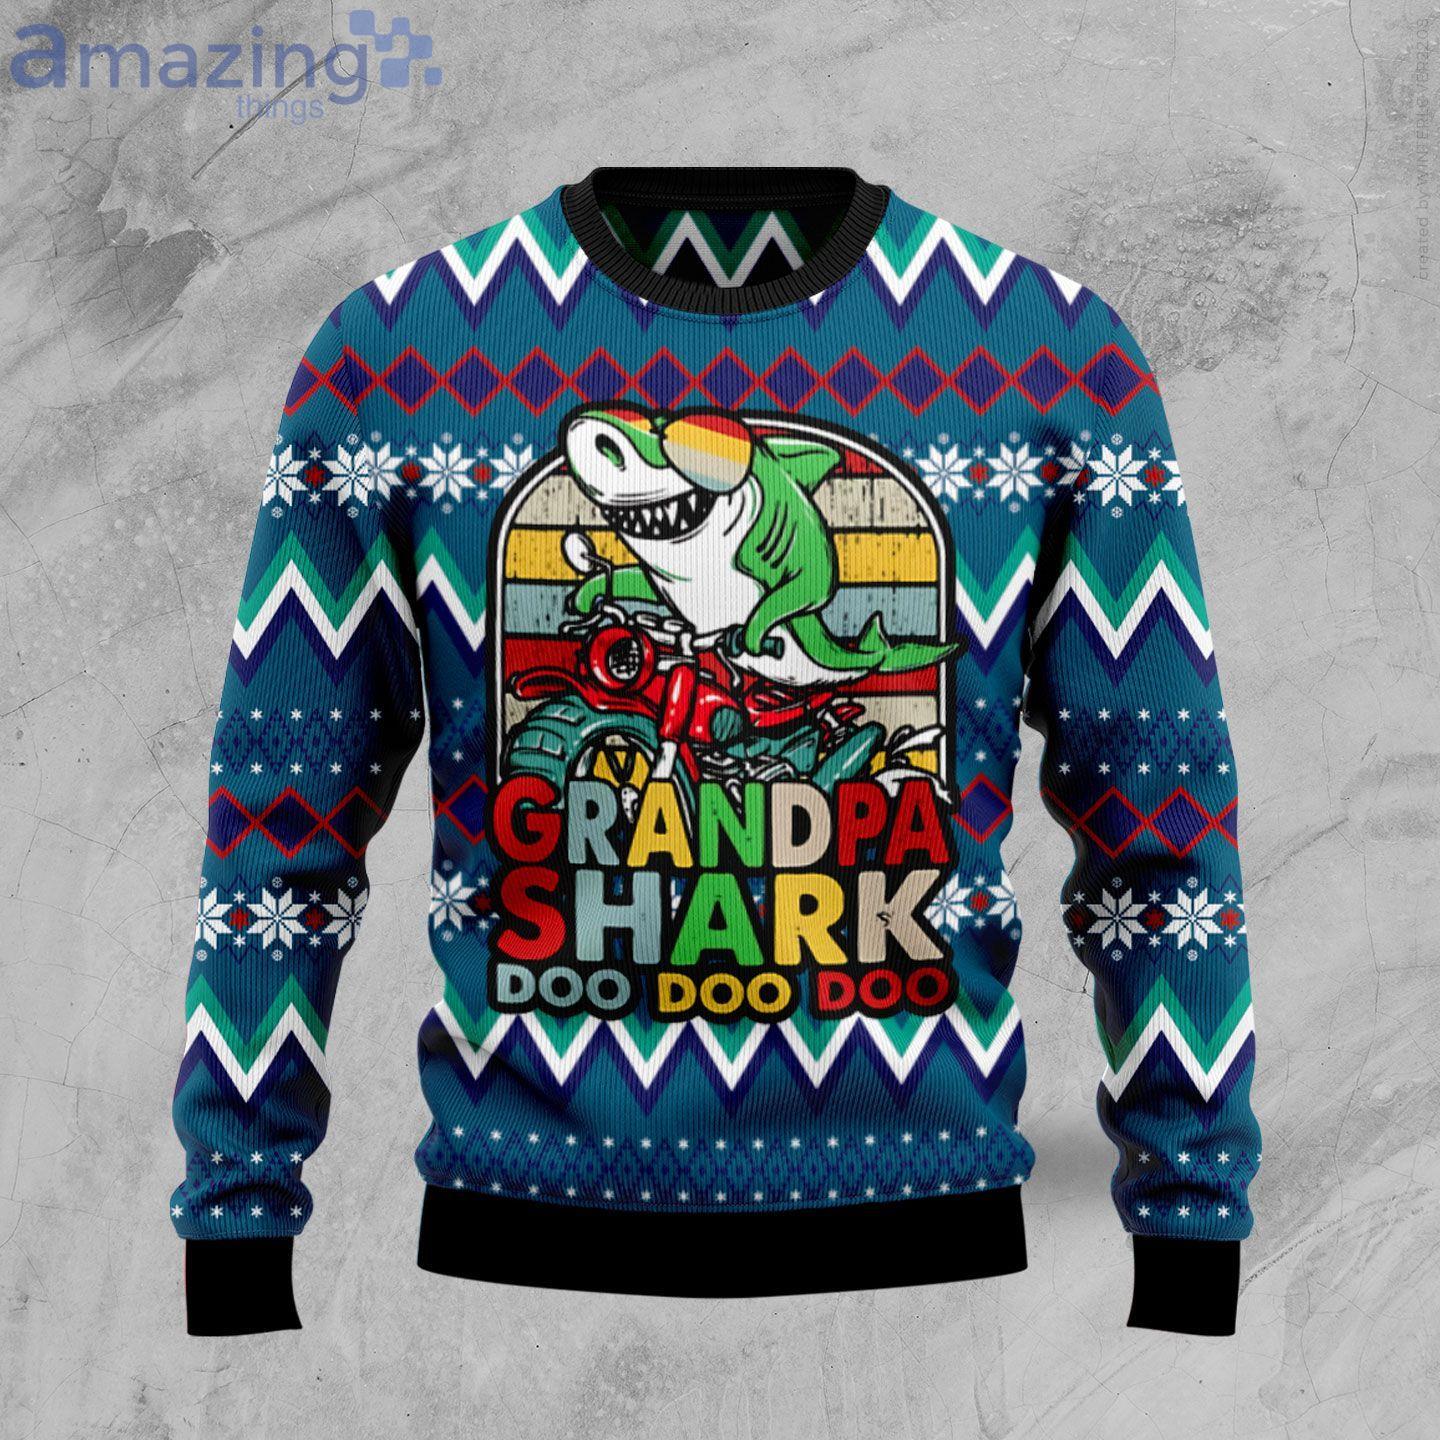 Grandpa Shark Dododo Funy Gift Ugly Christmas Sweater Product Photo 1